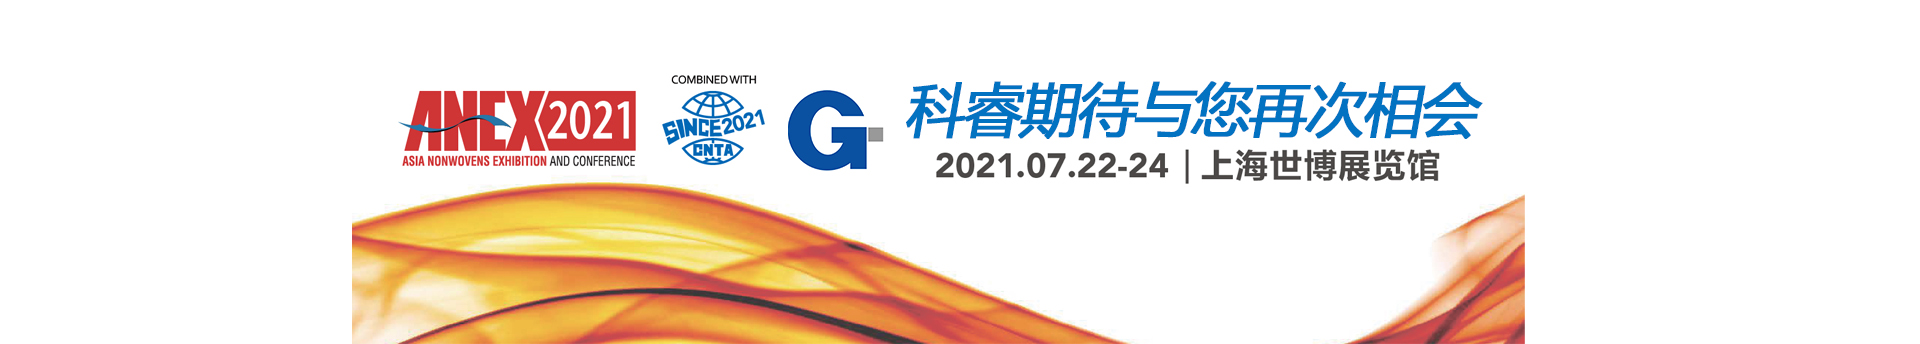 CEEG上海太阳能科技有限公司
